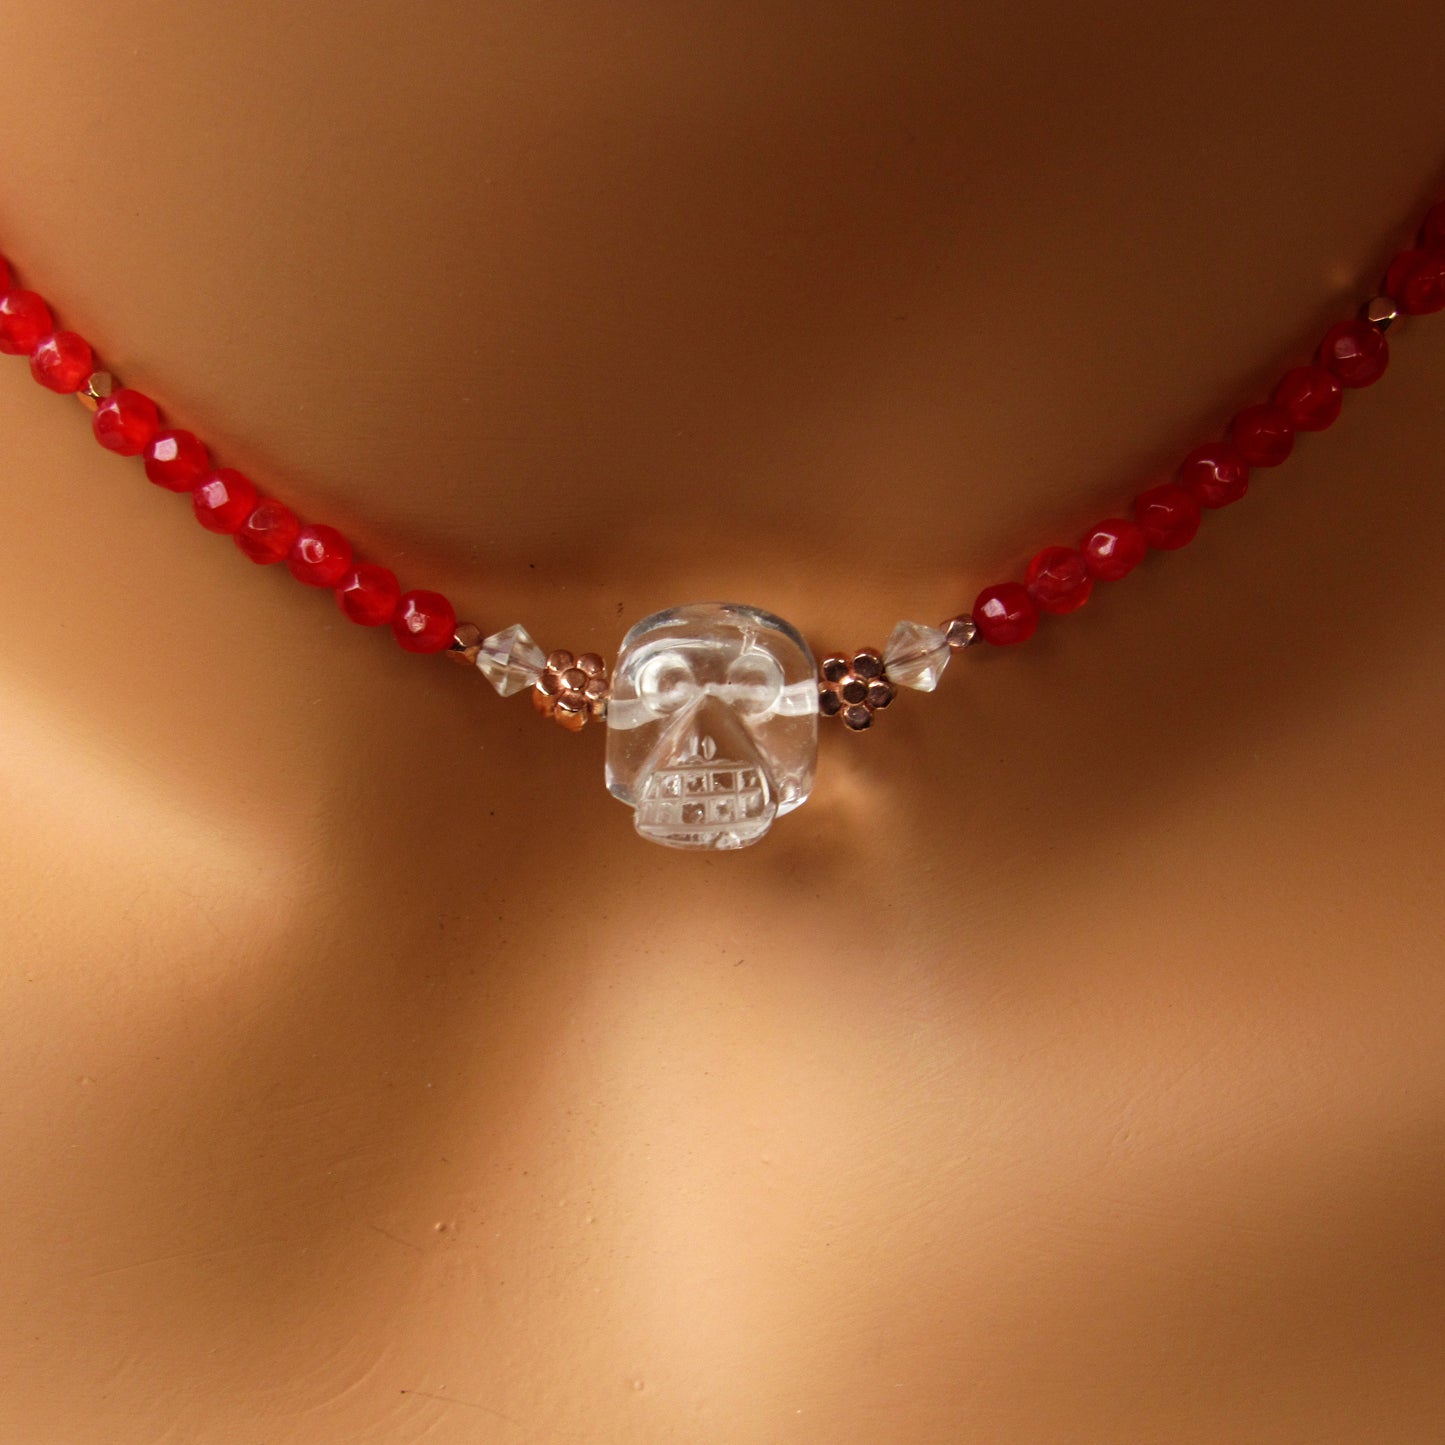 Red agate gemstones, Clear Quartz,  18 kt Rose gold vermeil over sterling silver flowers beaded choker